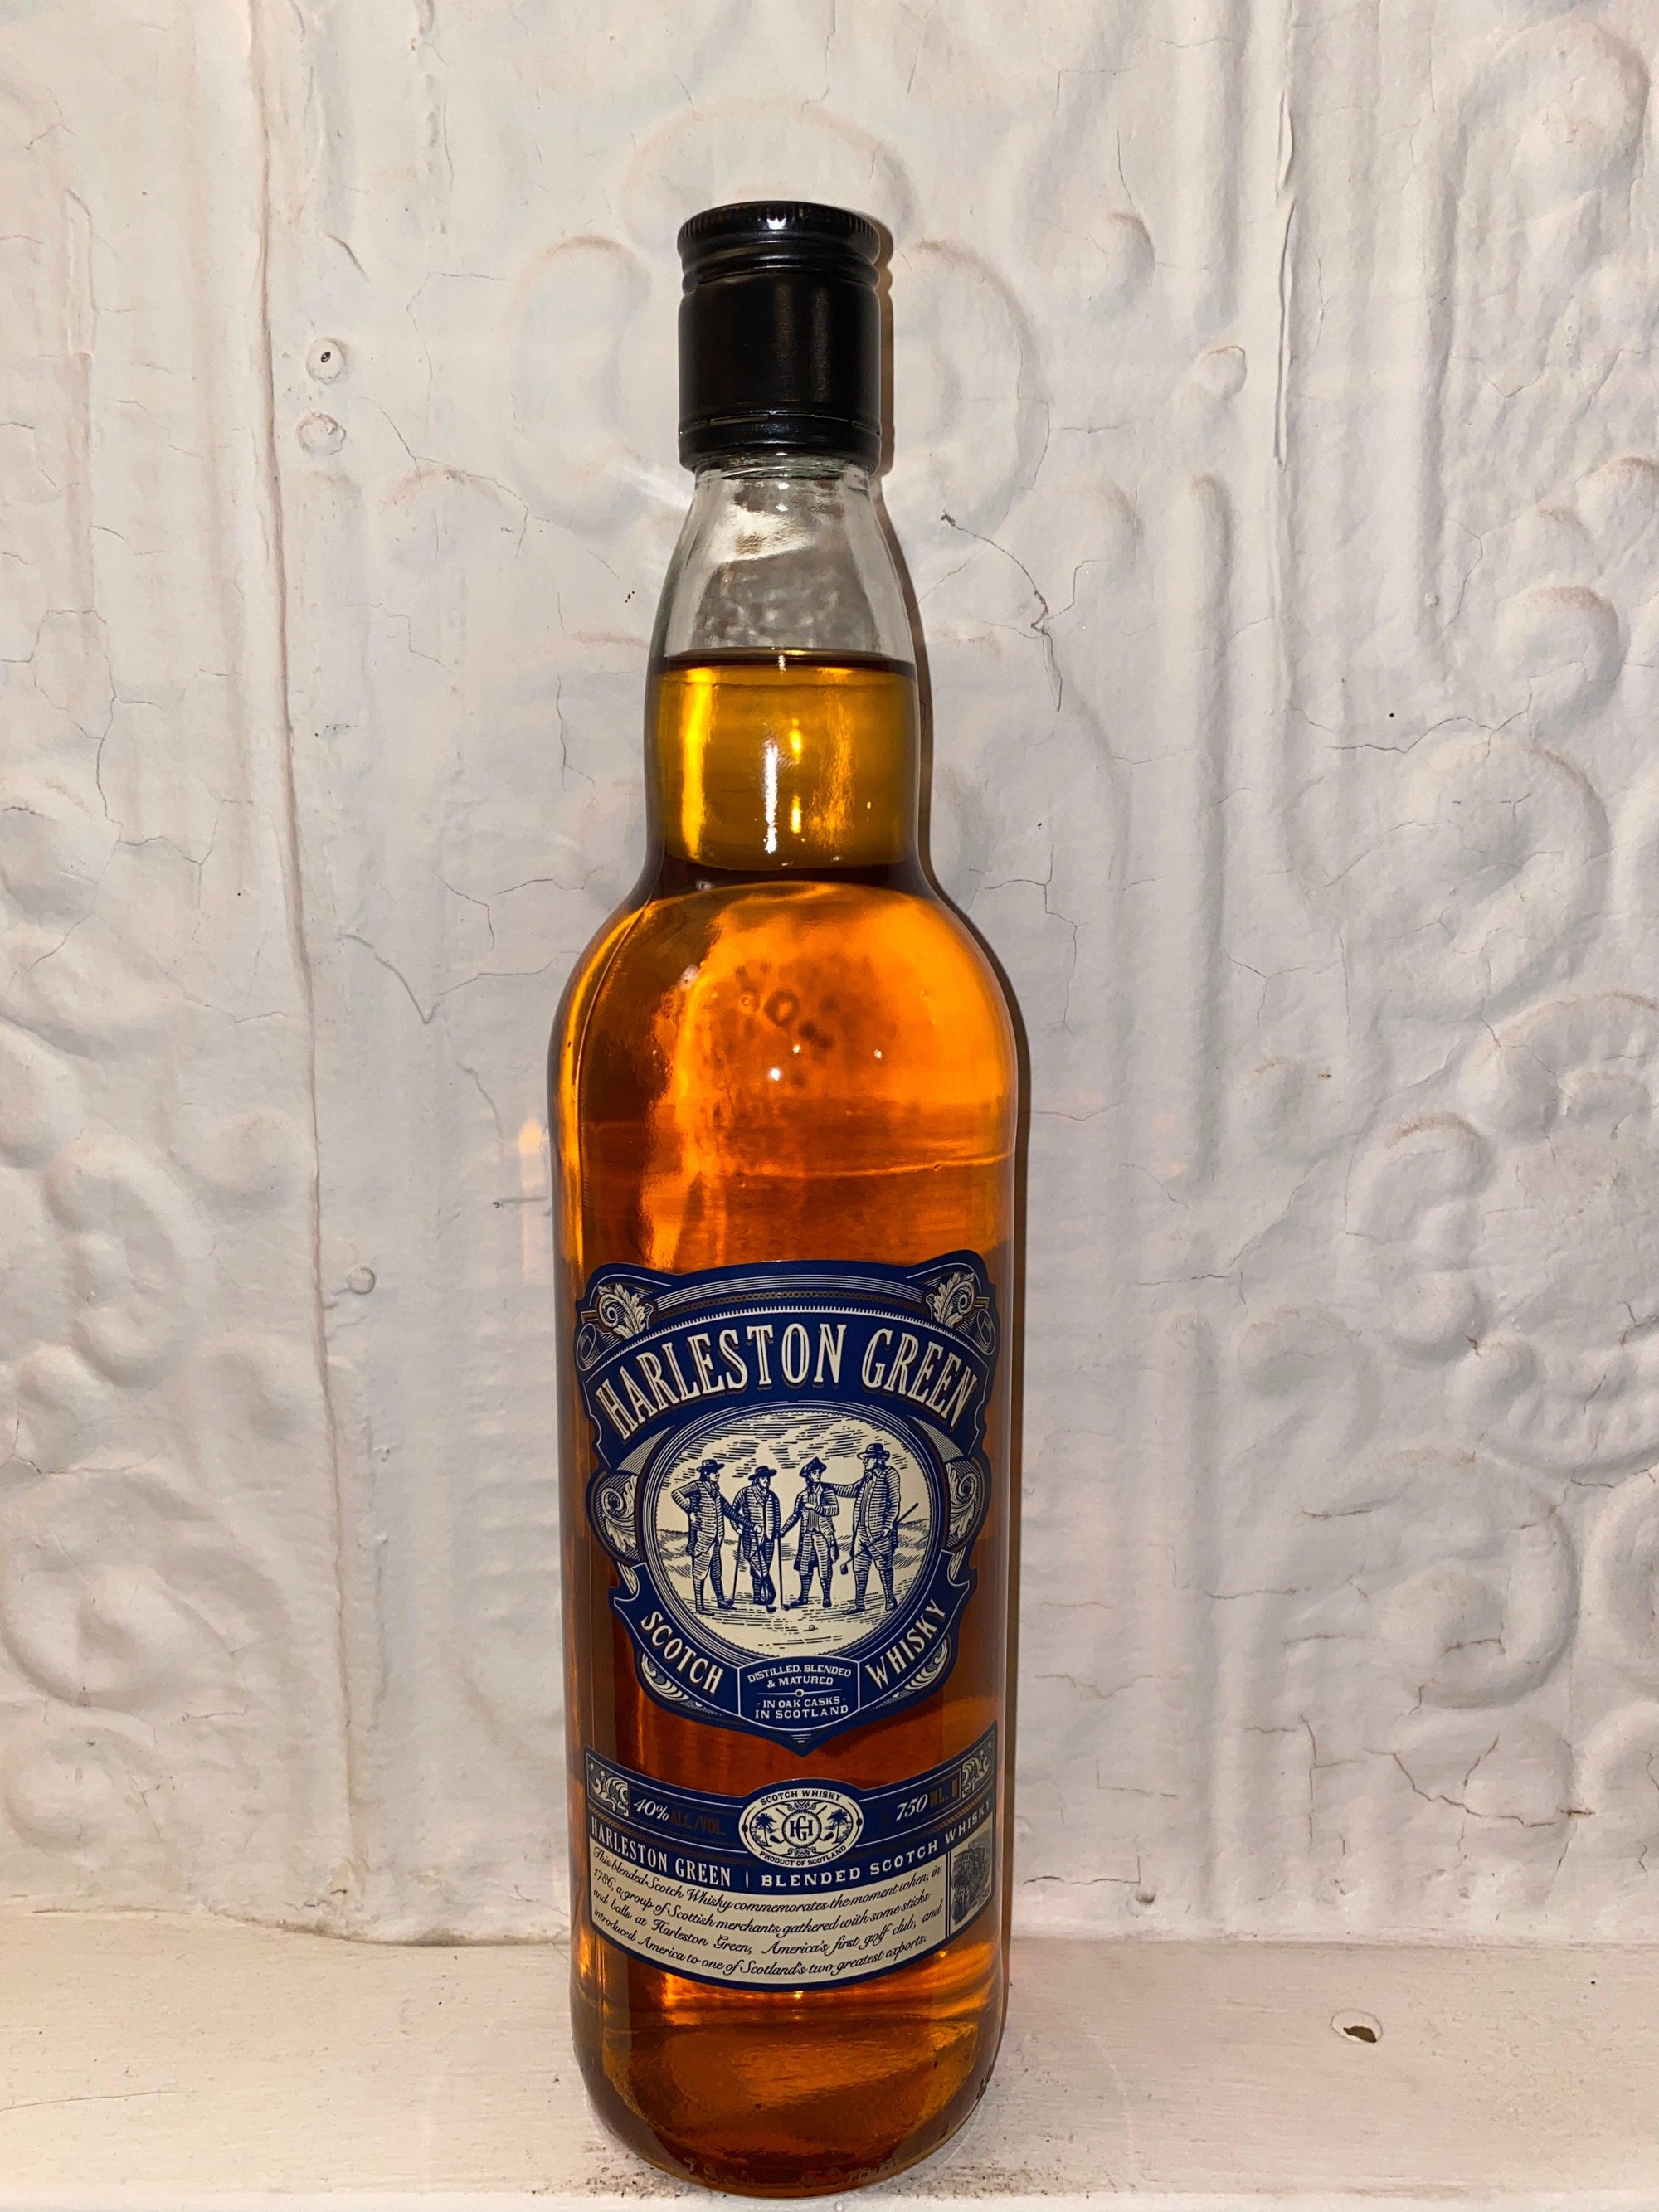 Blended Scotch Whisky, Harleston Green (Scotland)-Spirits-Bibber & Bell